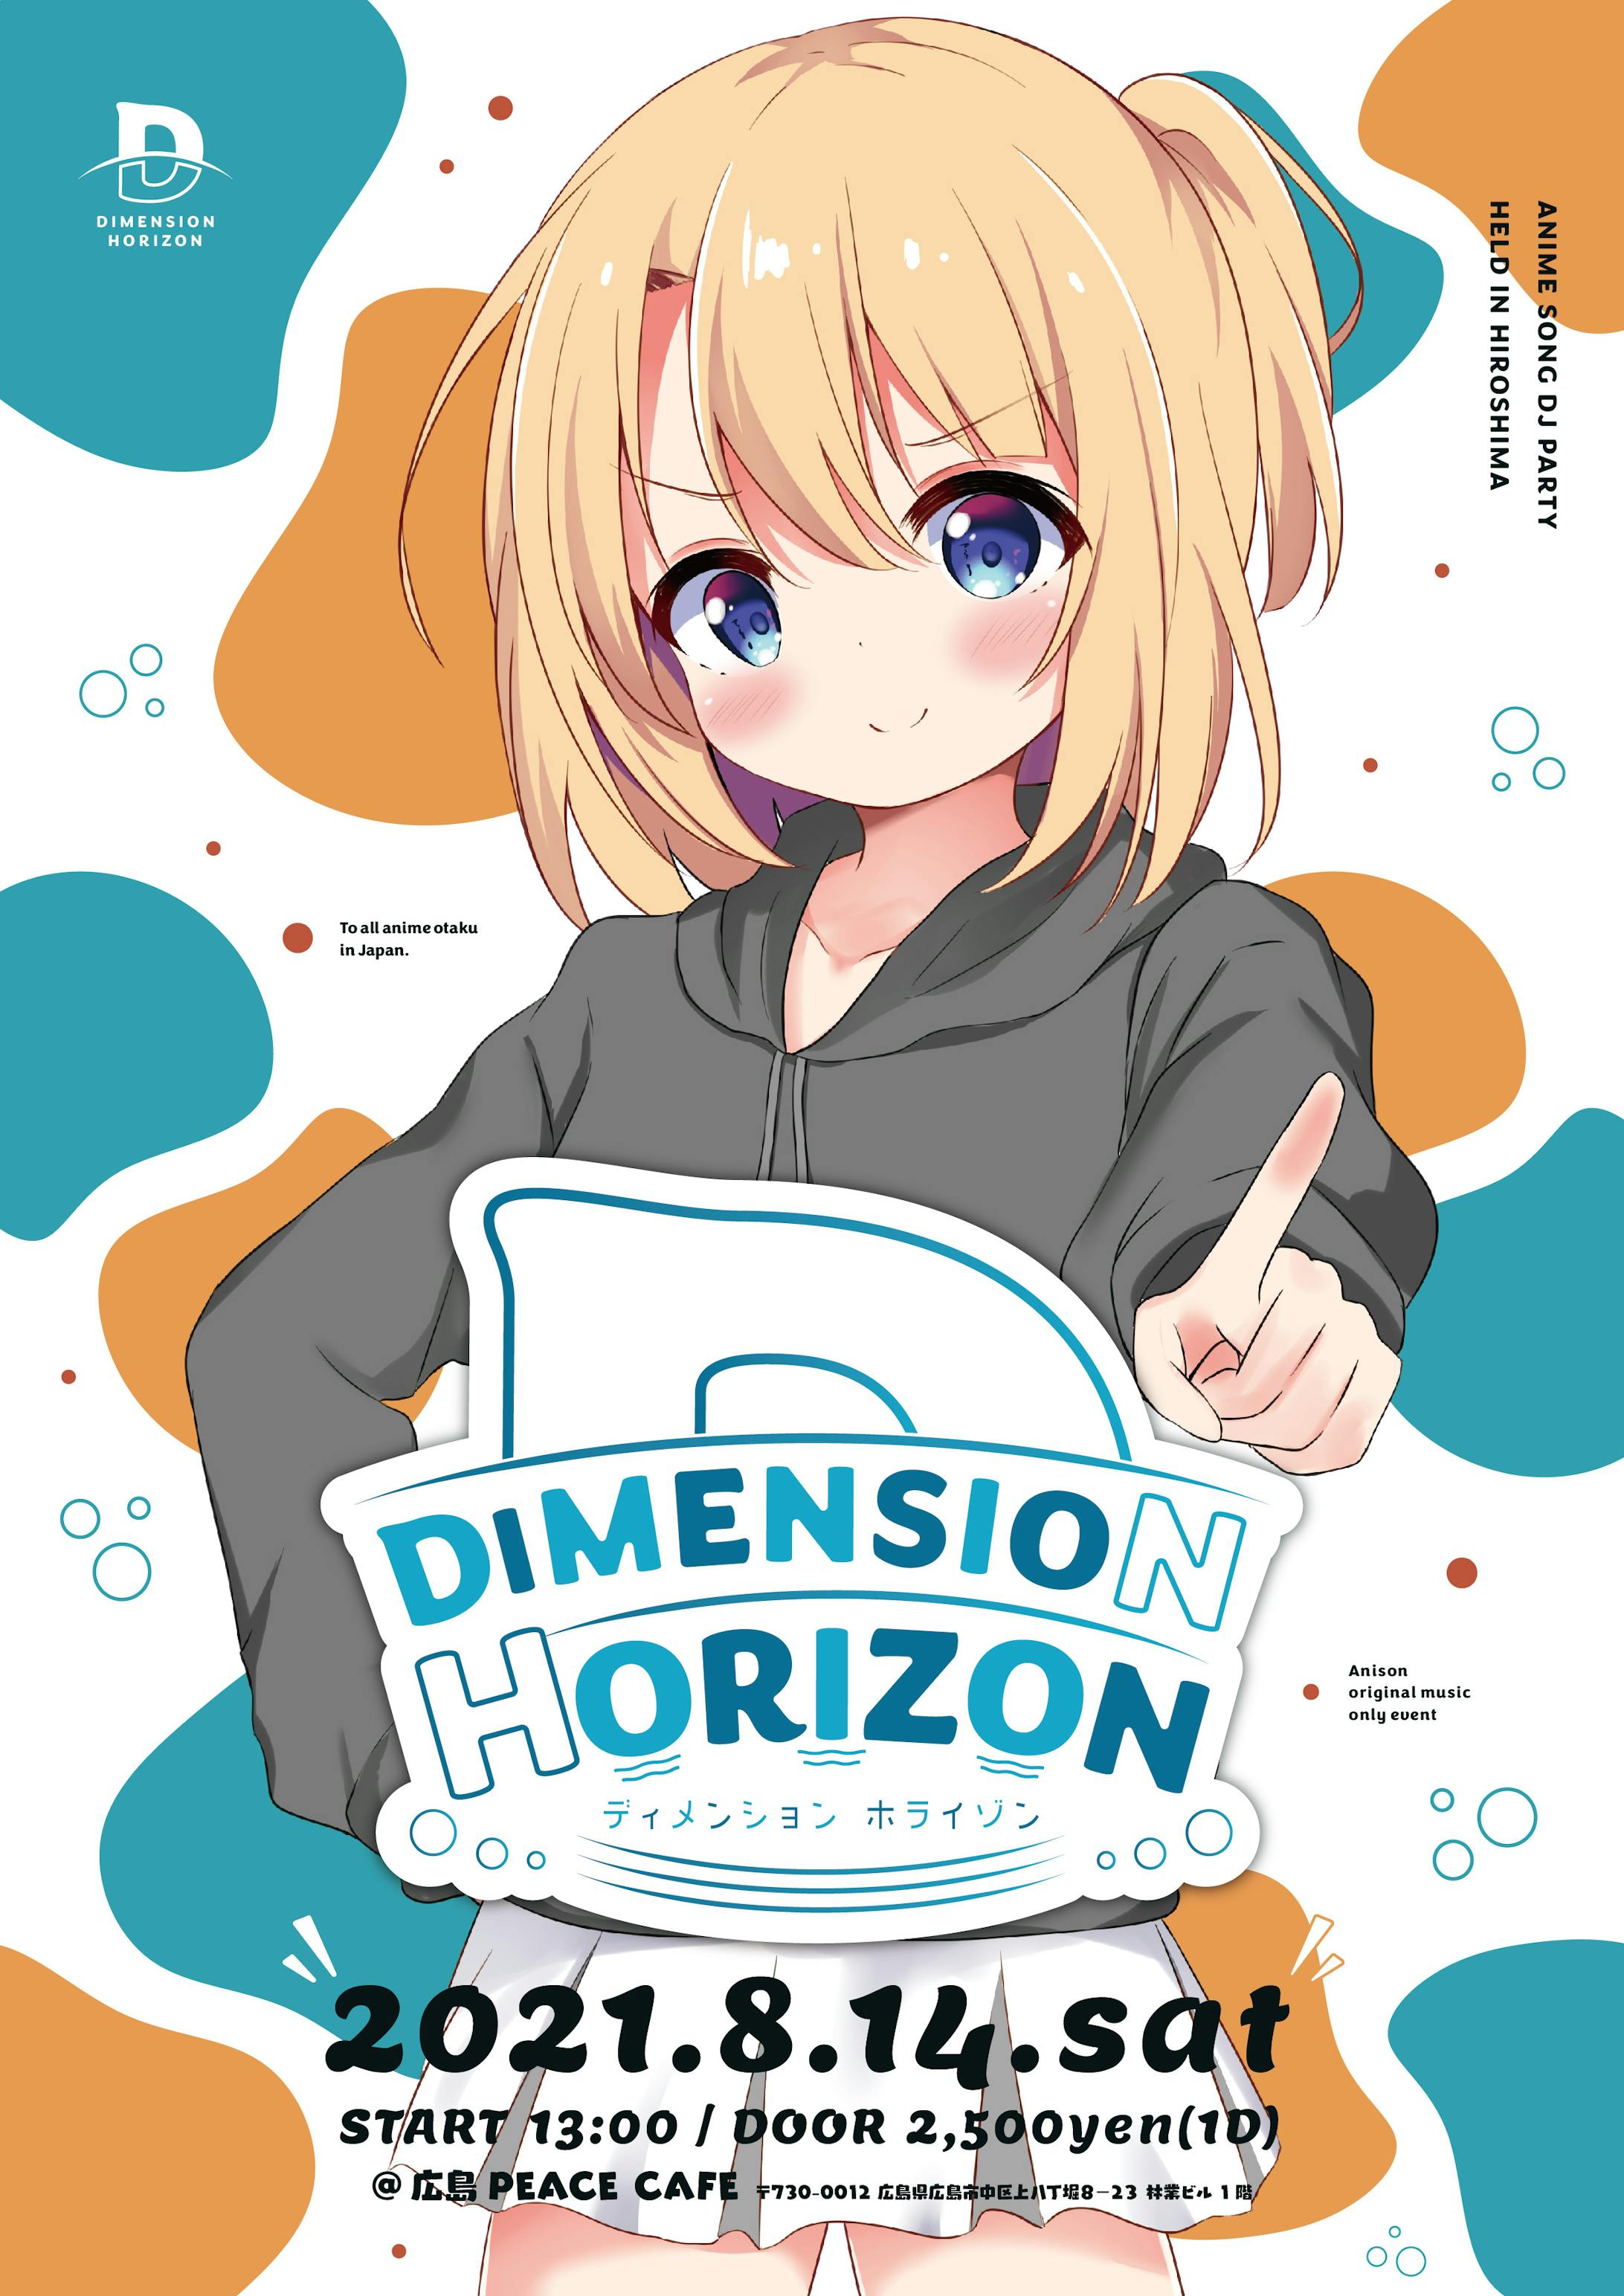 DIMENSION HORIZON フライヤー-1